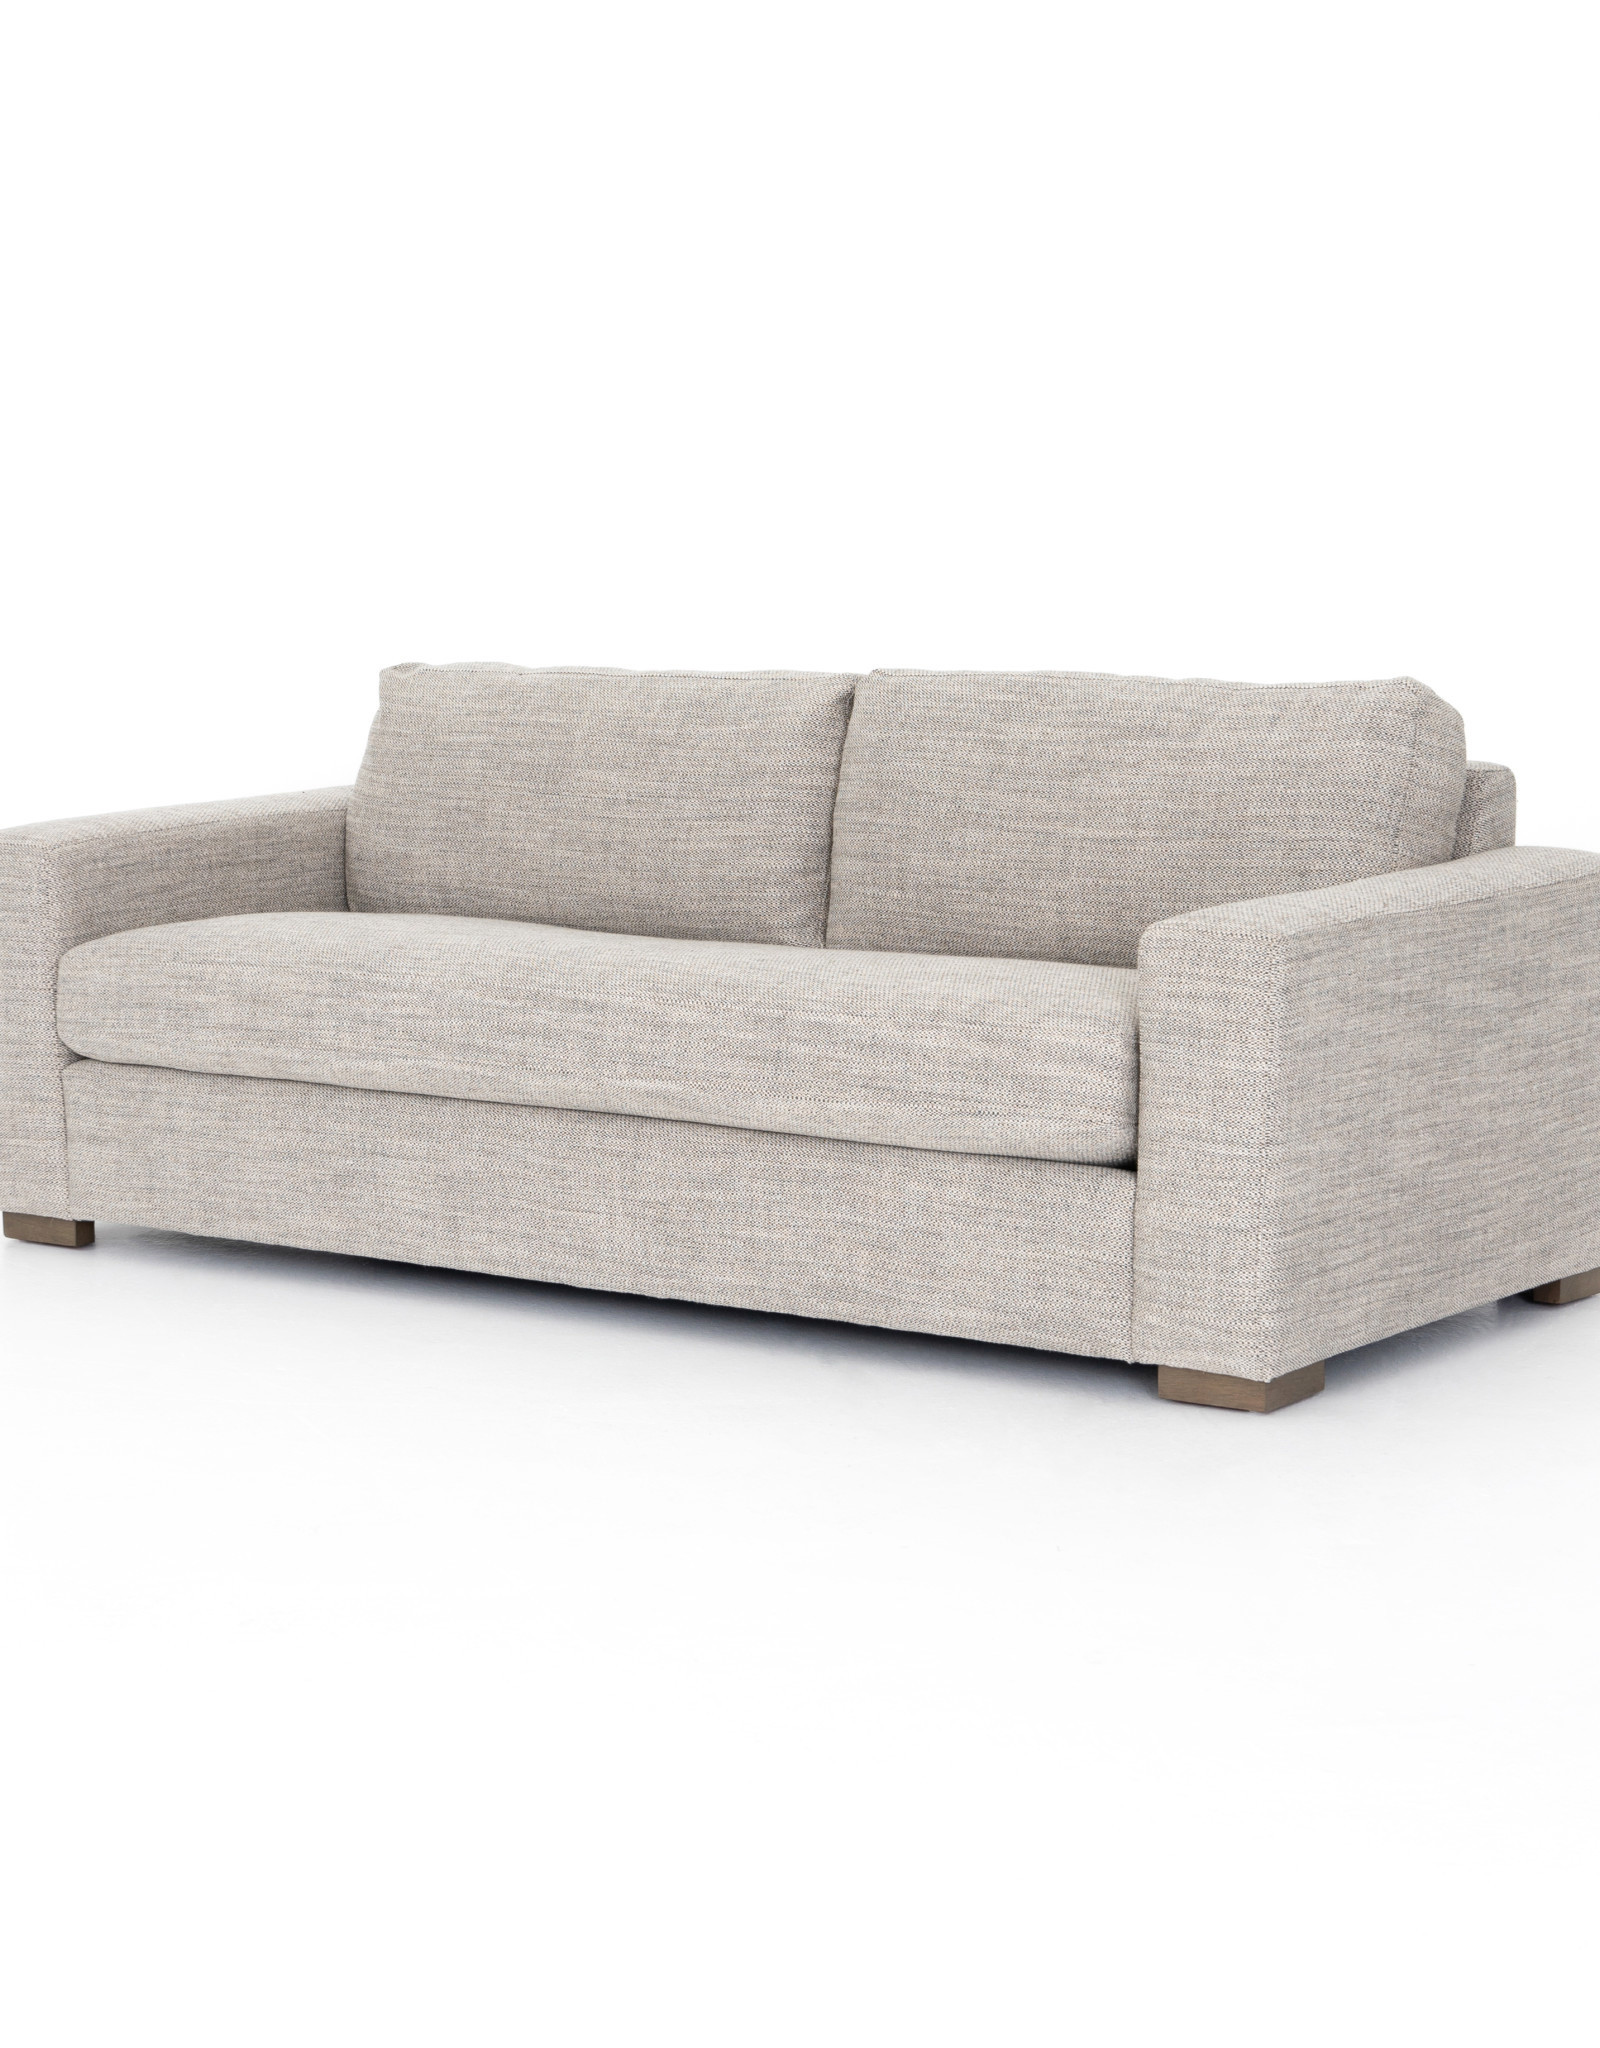 Boone 86-inch Sofa